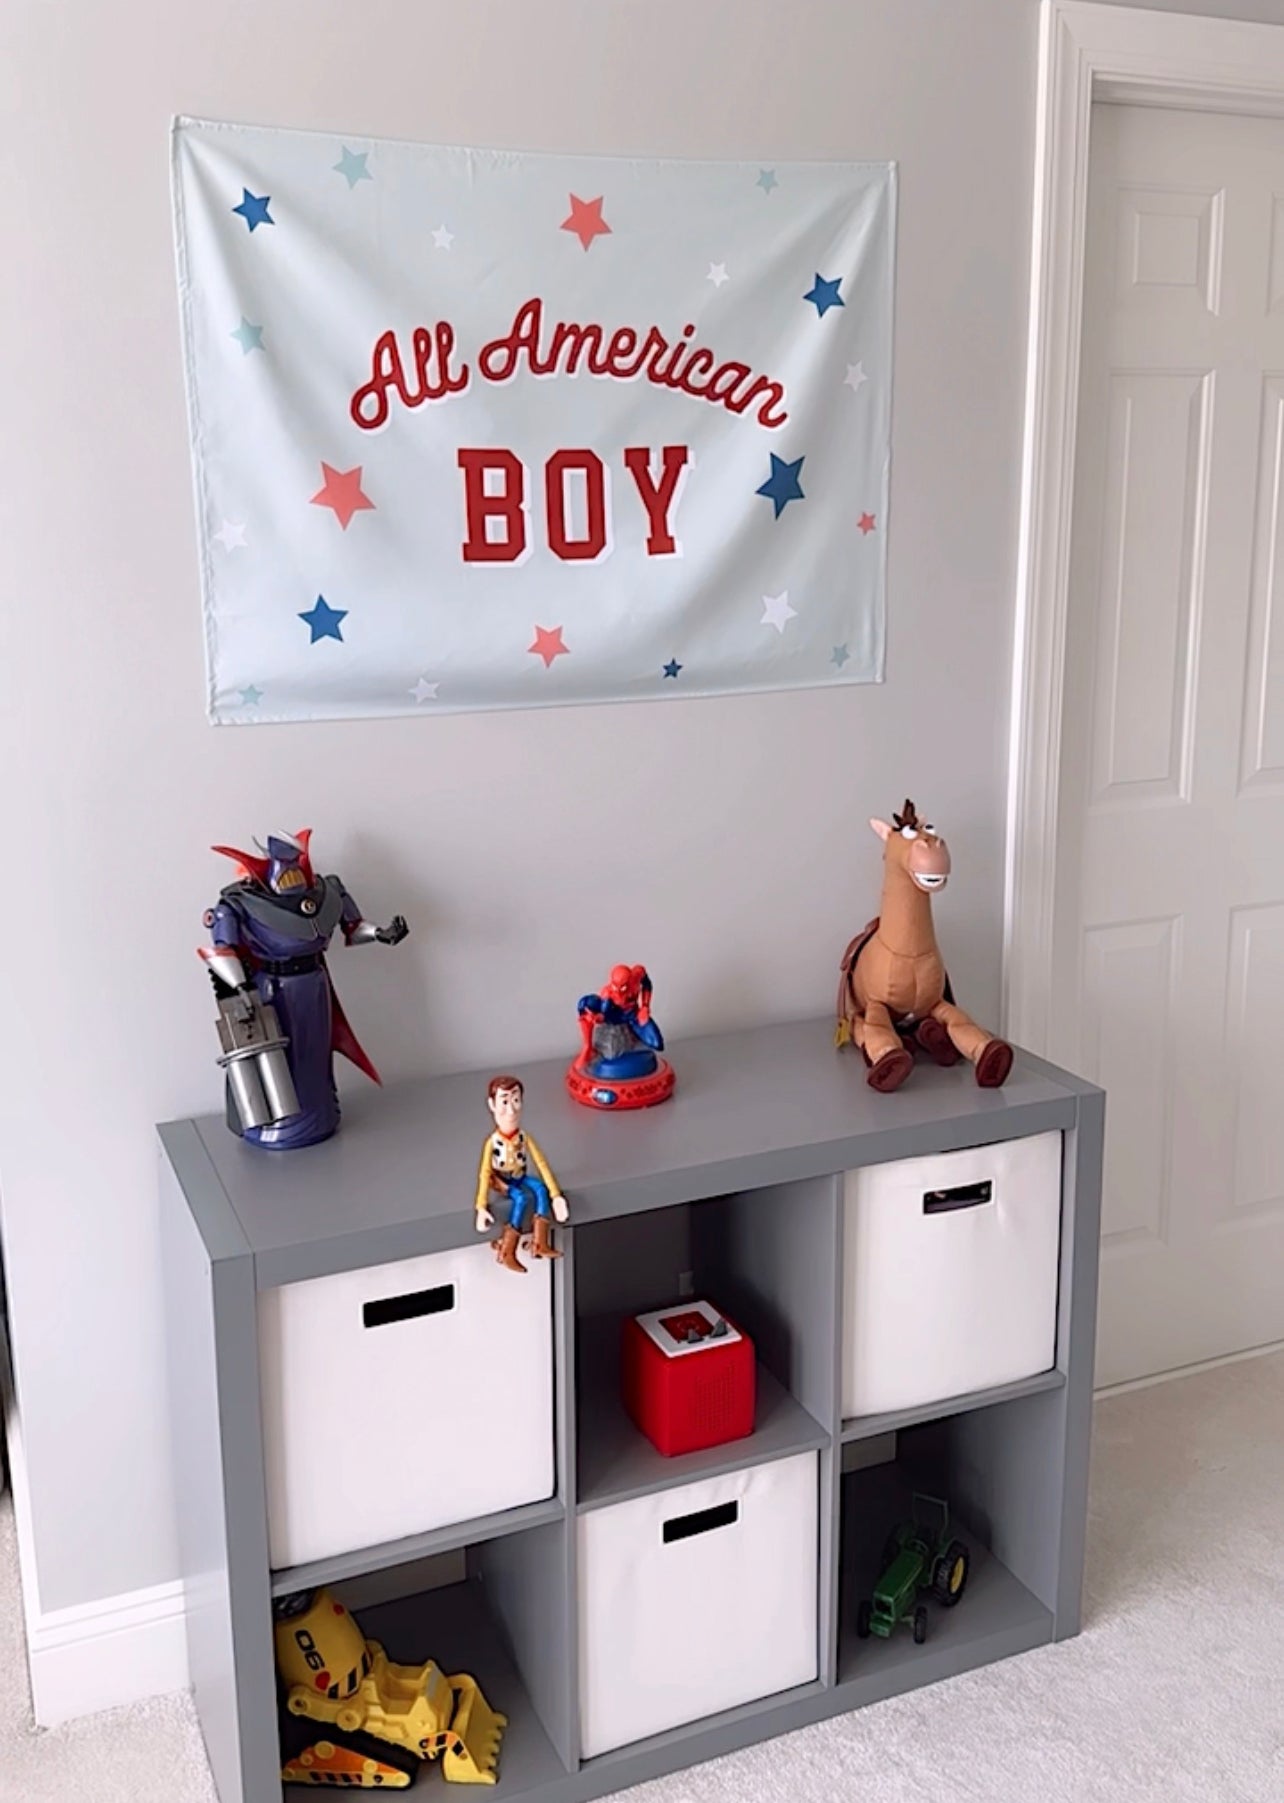 {Boy} All American Banner